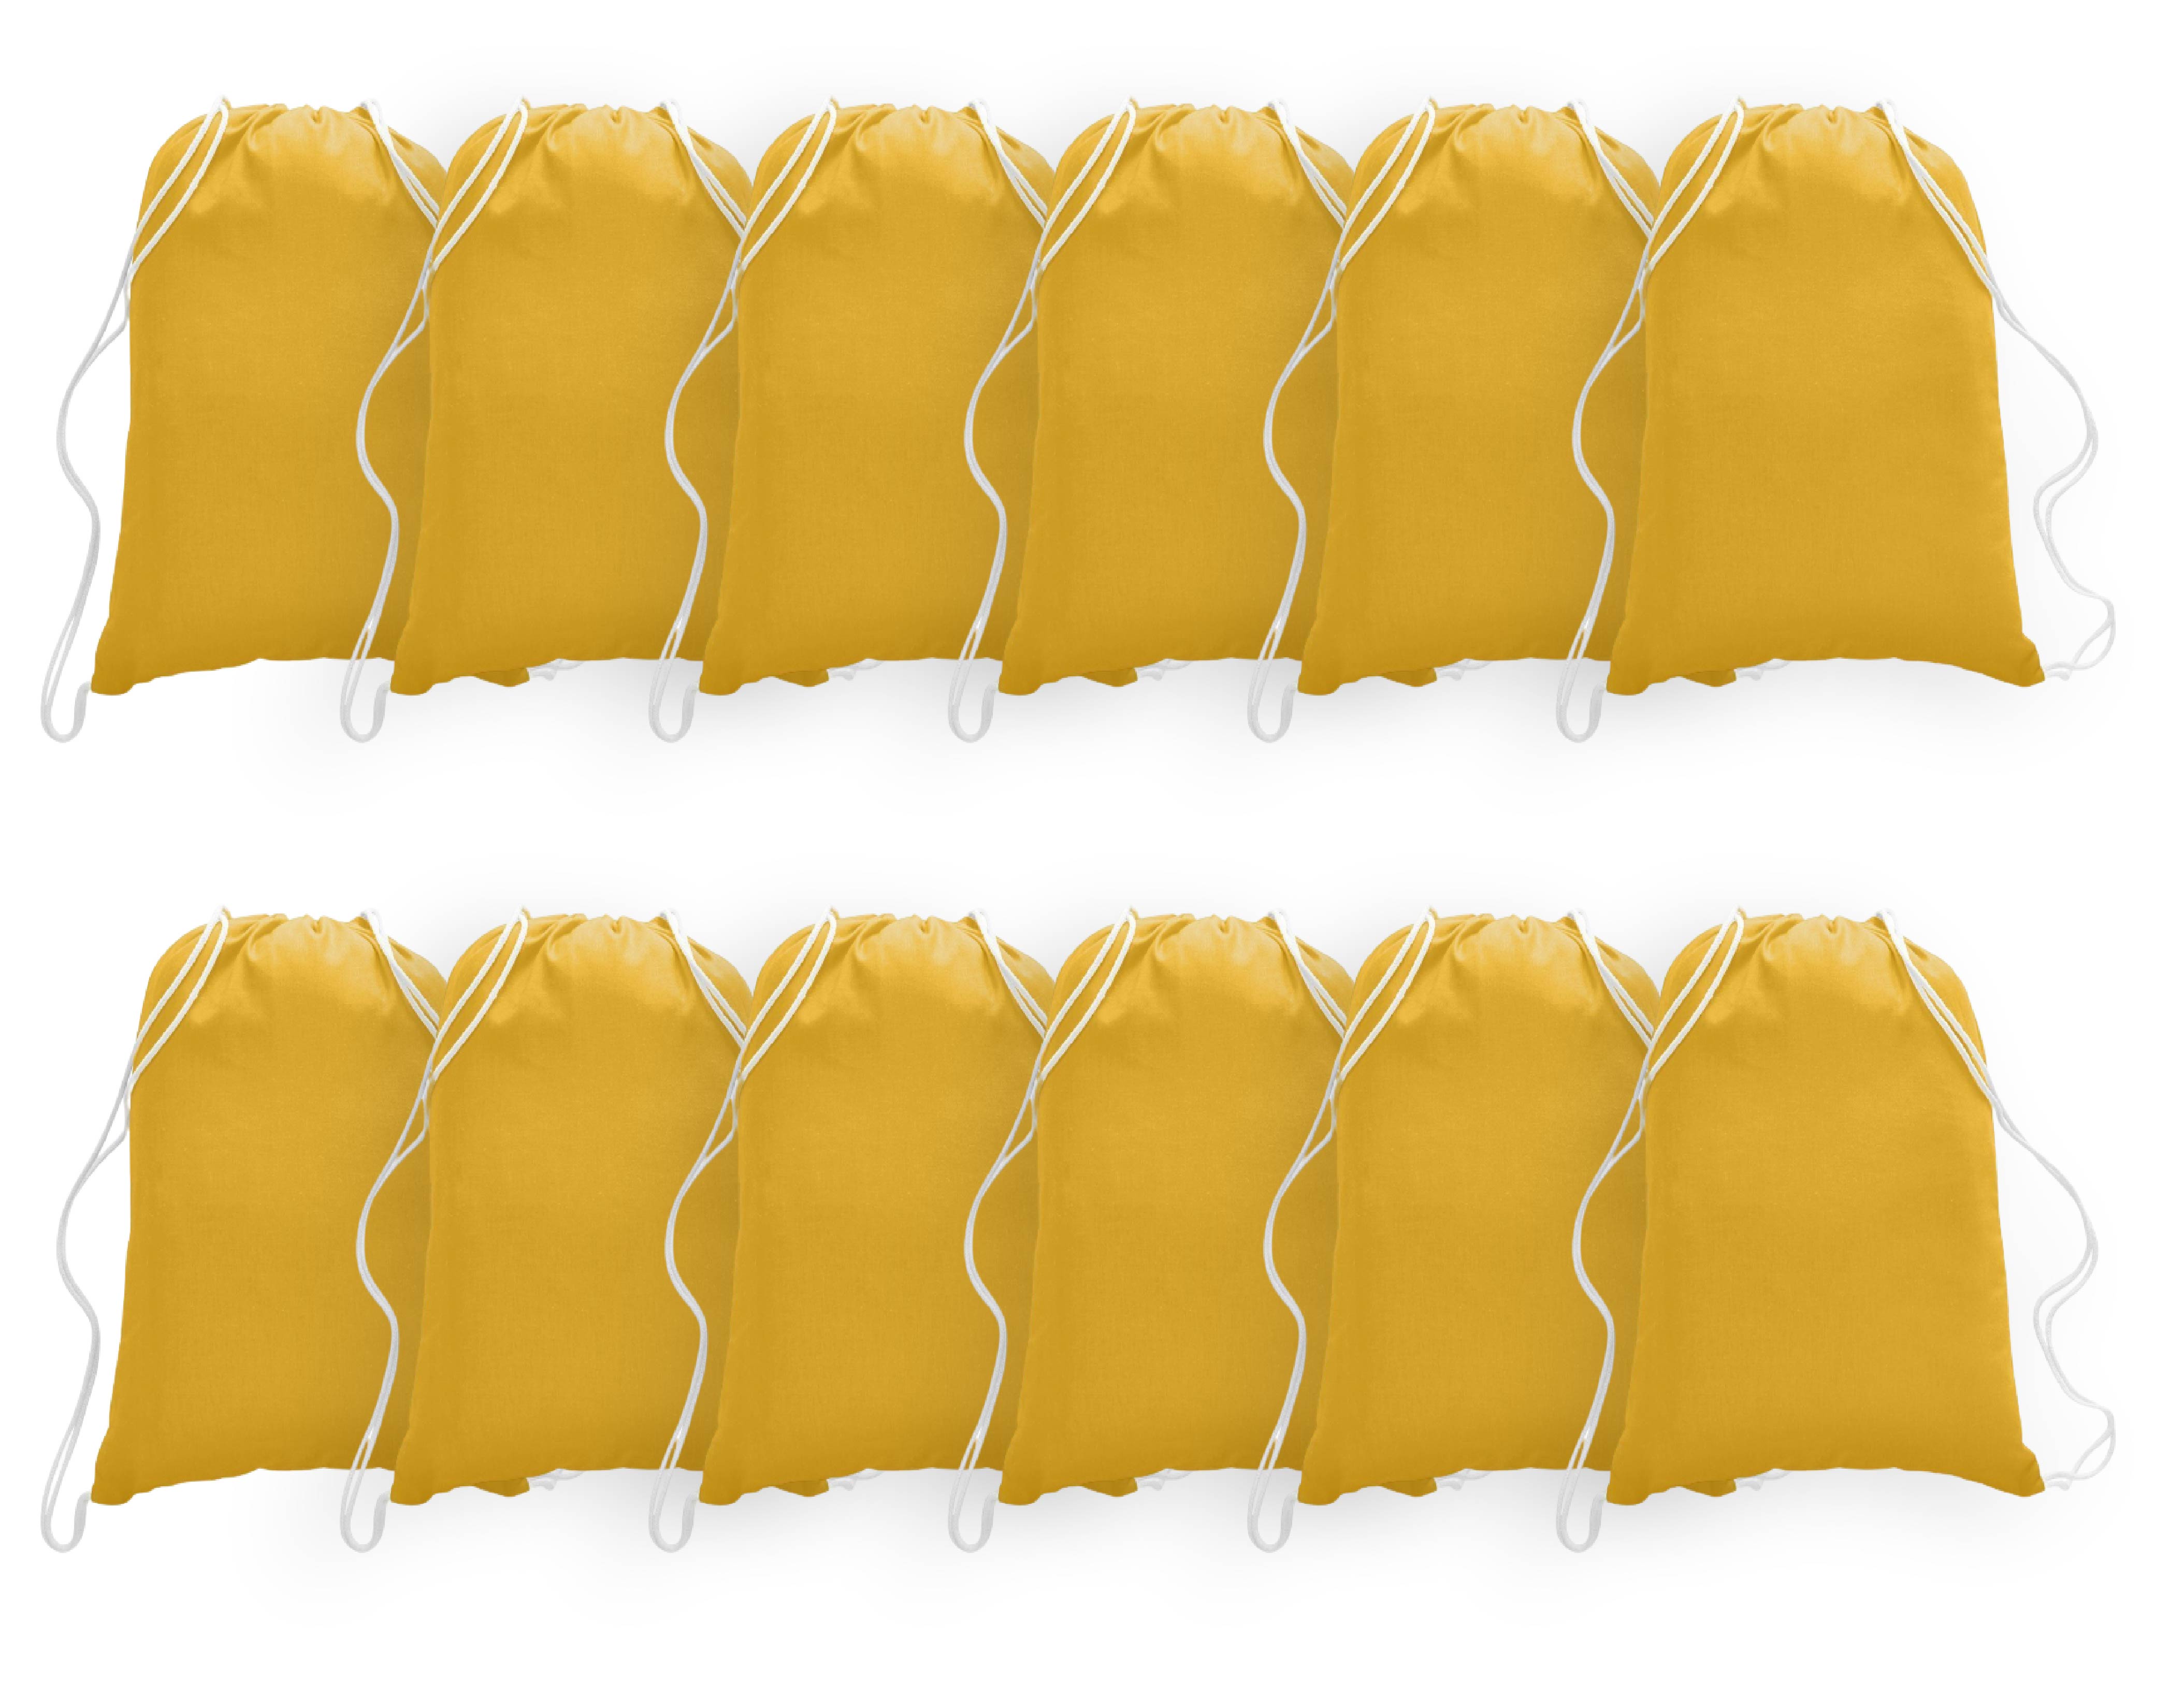 Sport Drawstring Bag, 100% Cotton, Gold Color